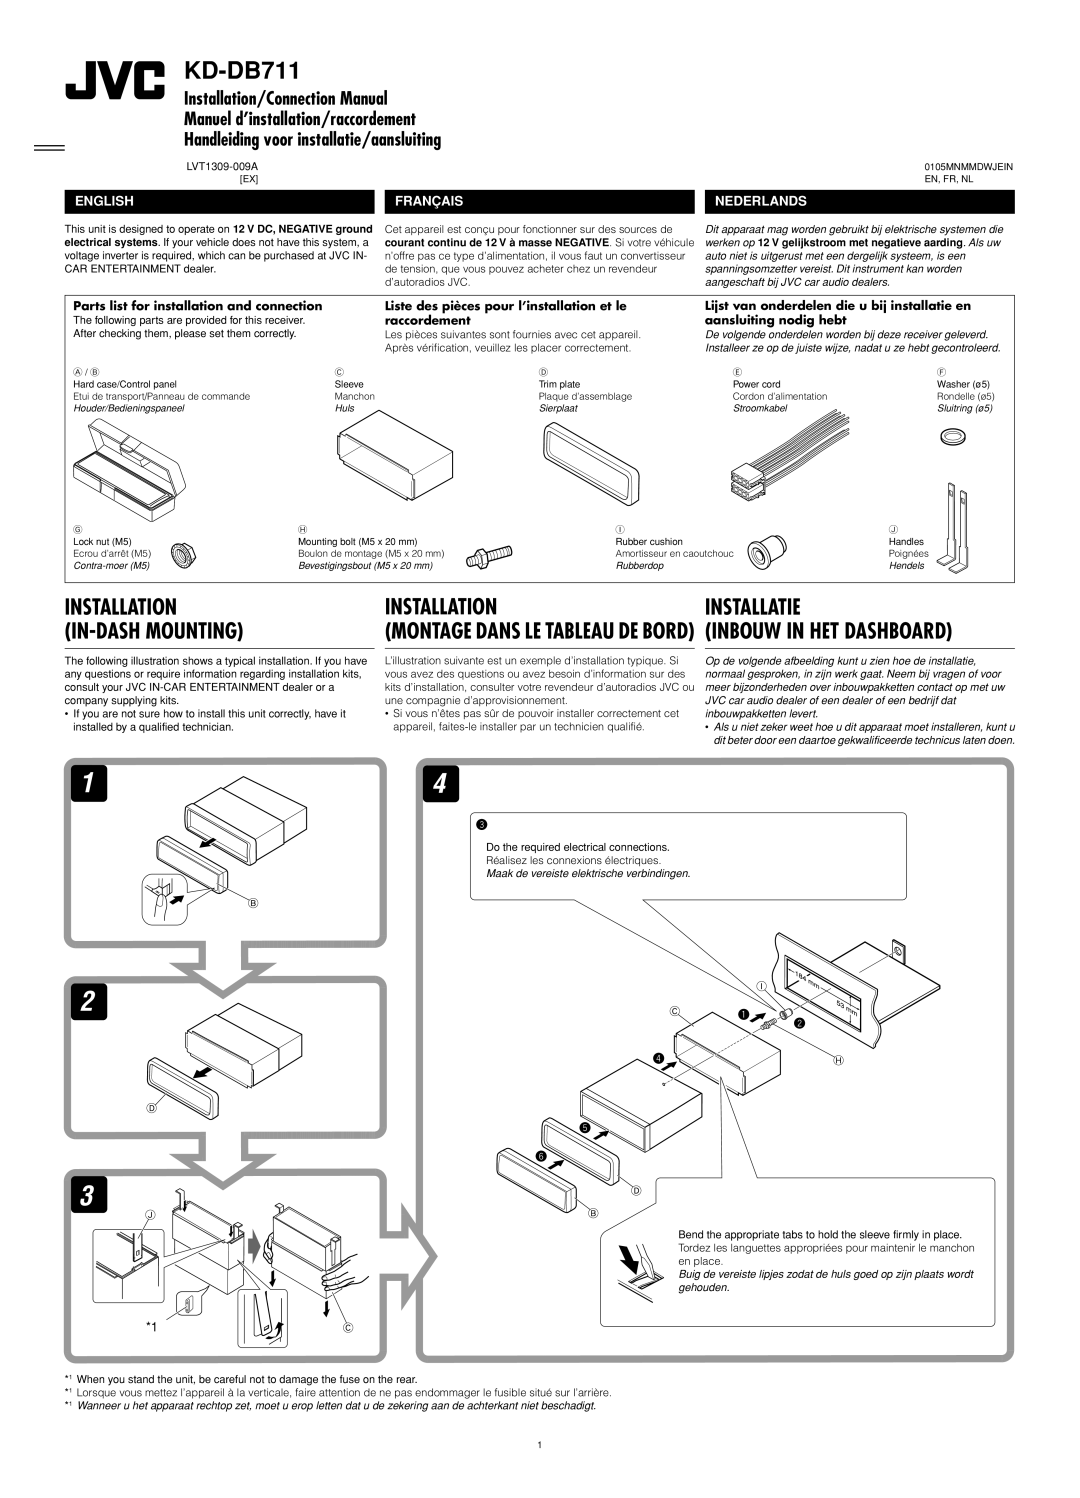 JVC KD-DB711 manual Installatie, Installation/Connection Manual, Manuel d’installation/raccordement, English, Français 